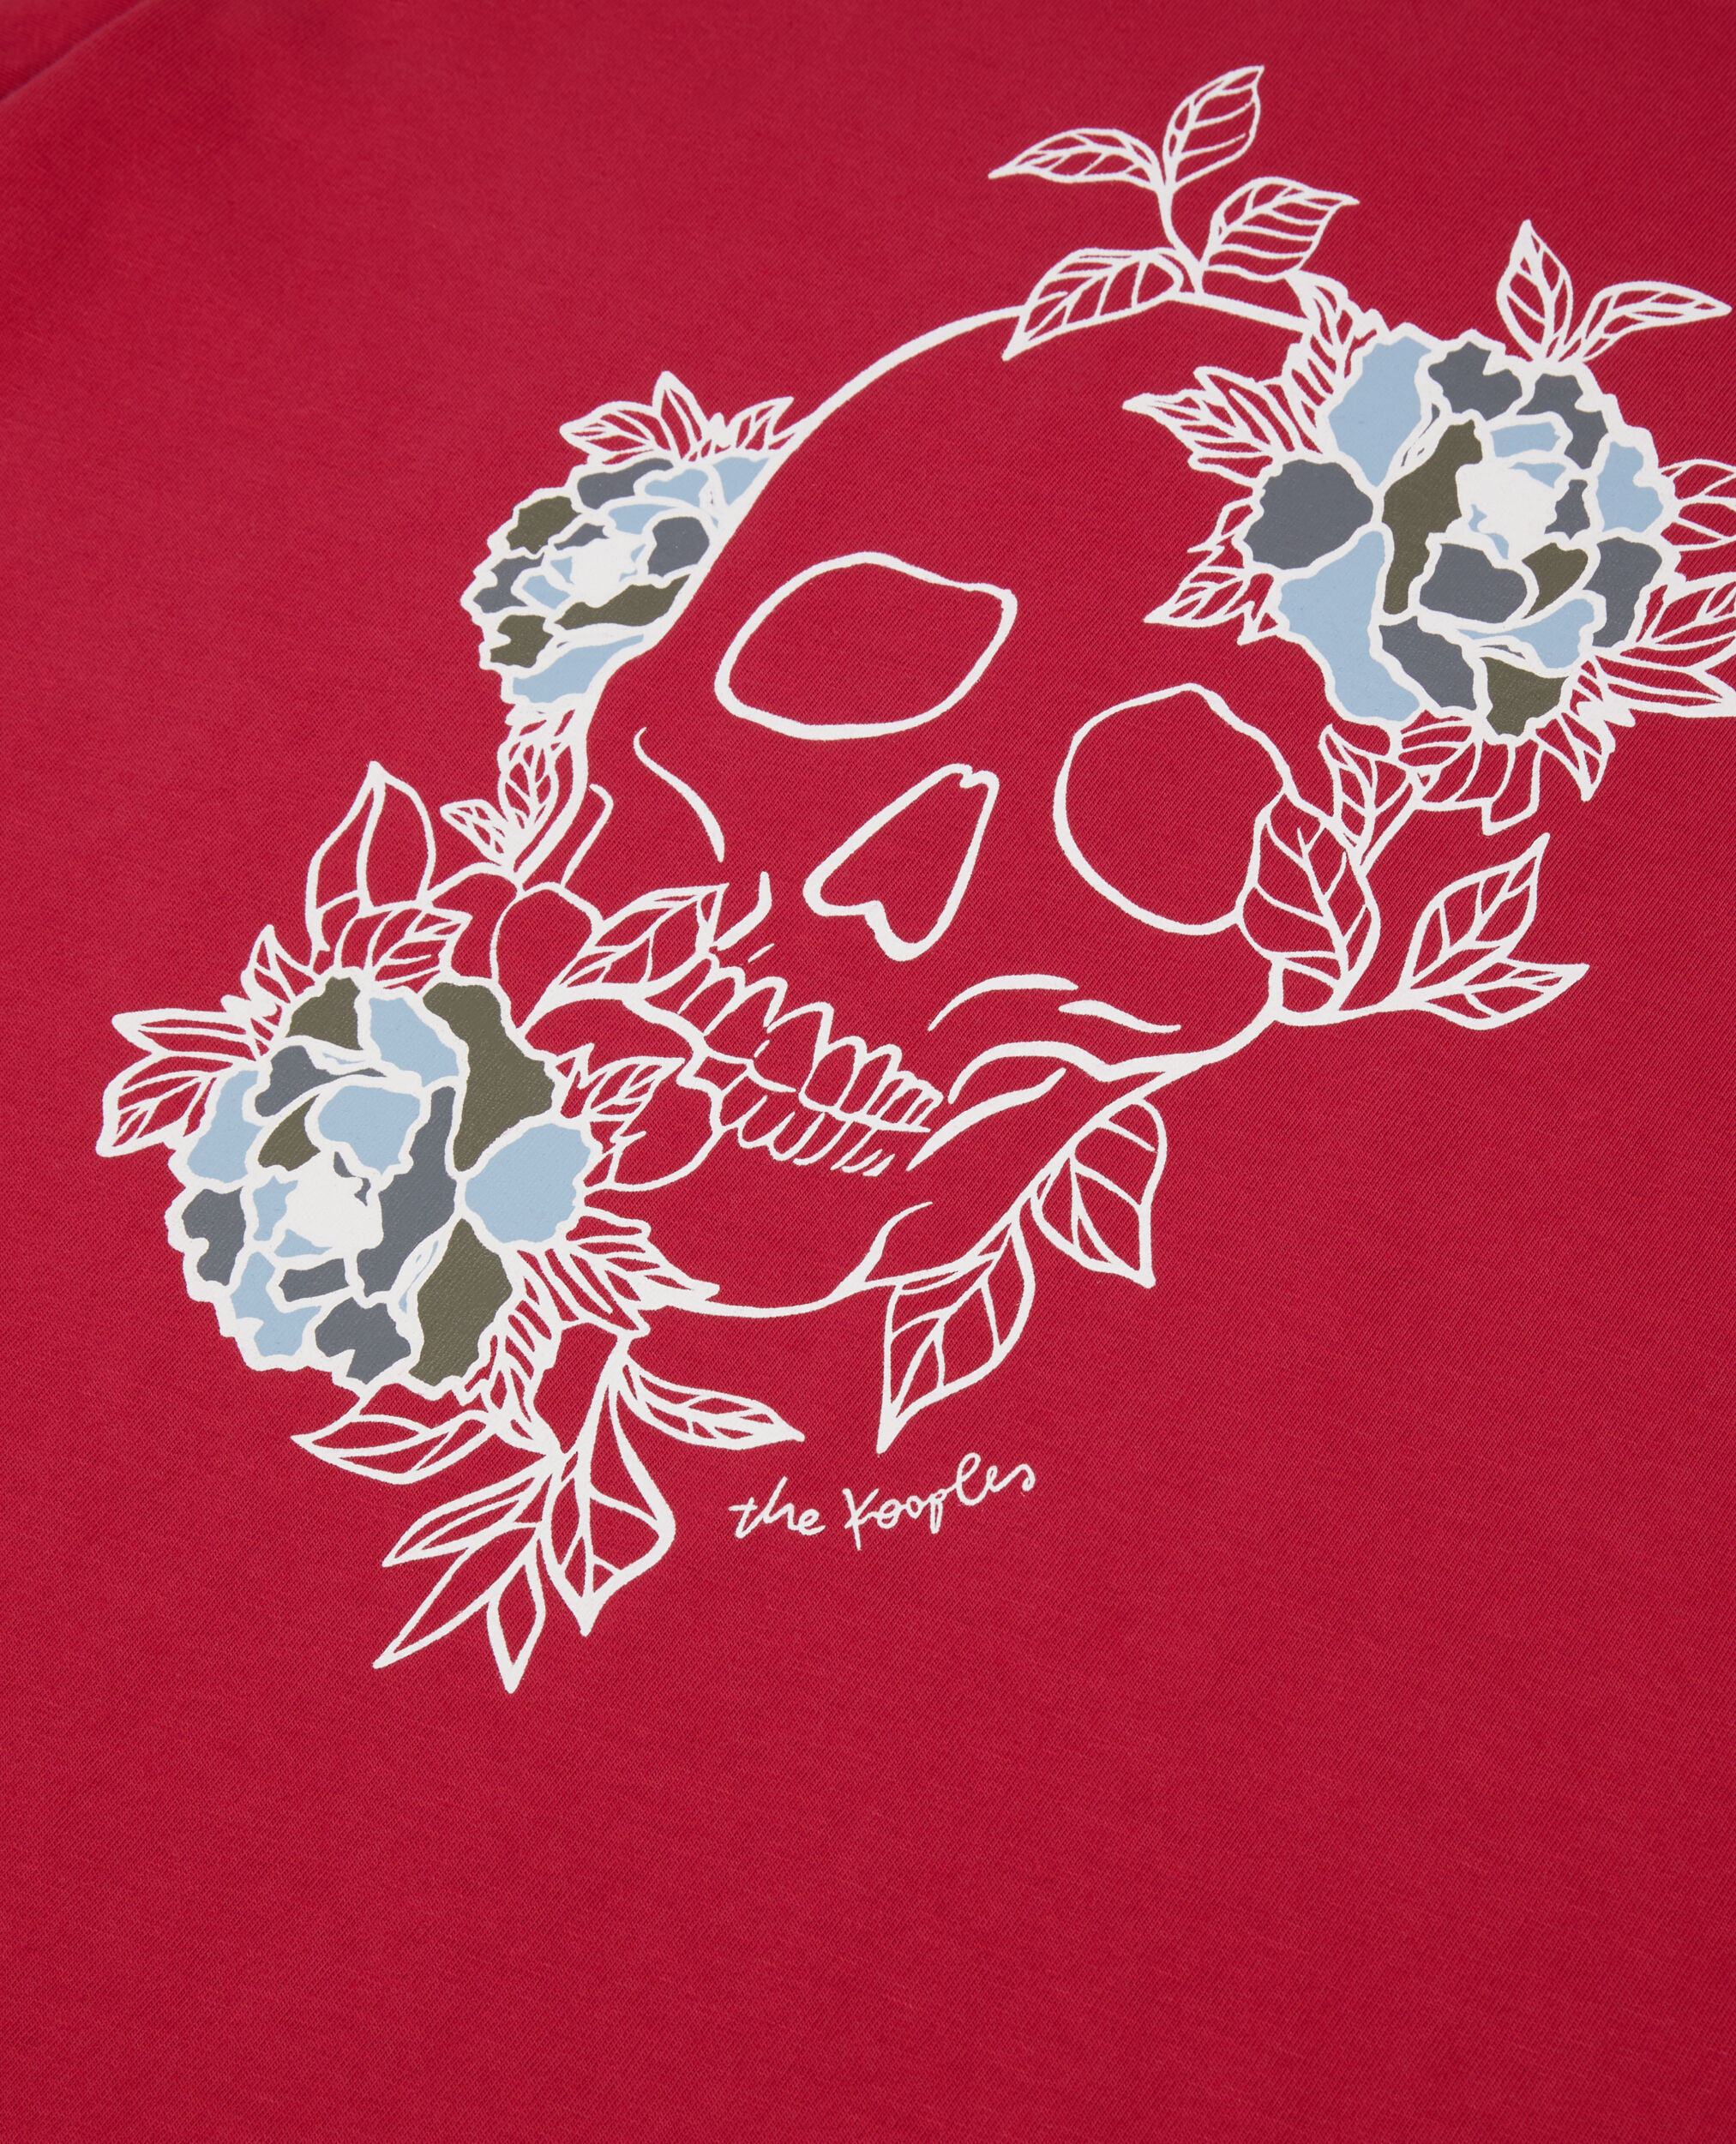 T-shirt Homme rouge avec sérigraphie Flower skull, CHERRY, hi-res image number null